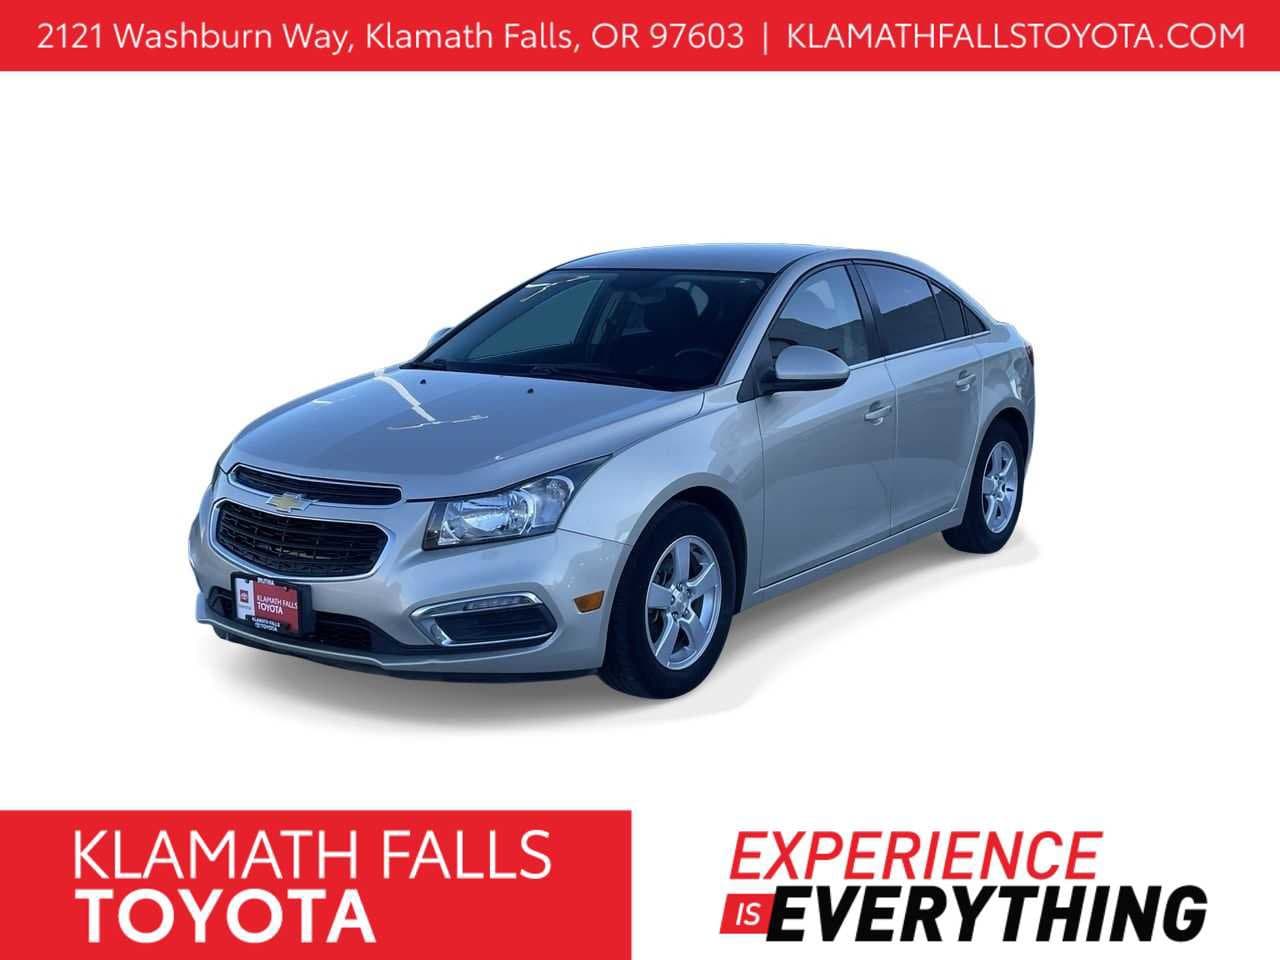 2016 Chevrolet Cruze Limited -
                Klamath Falls, OR